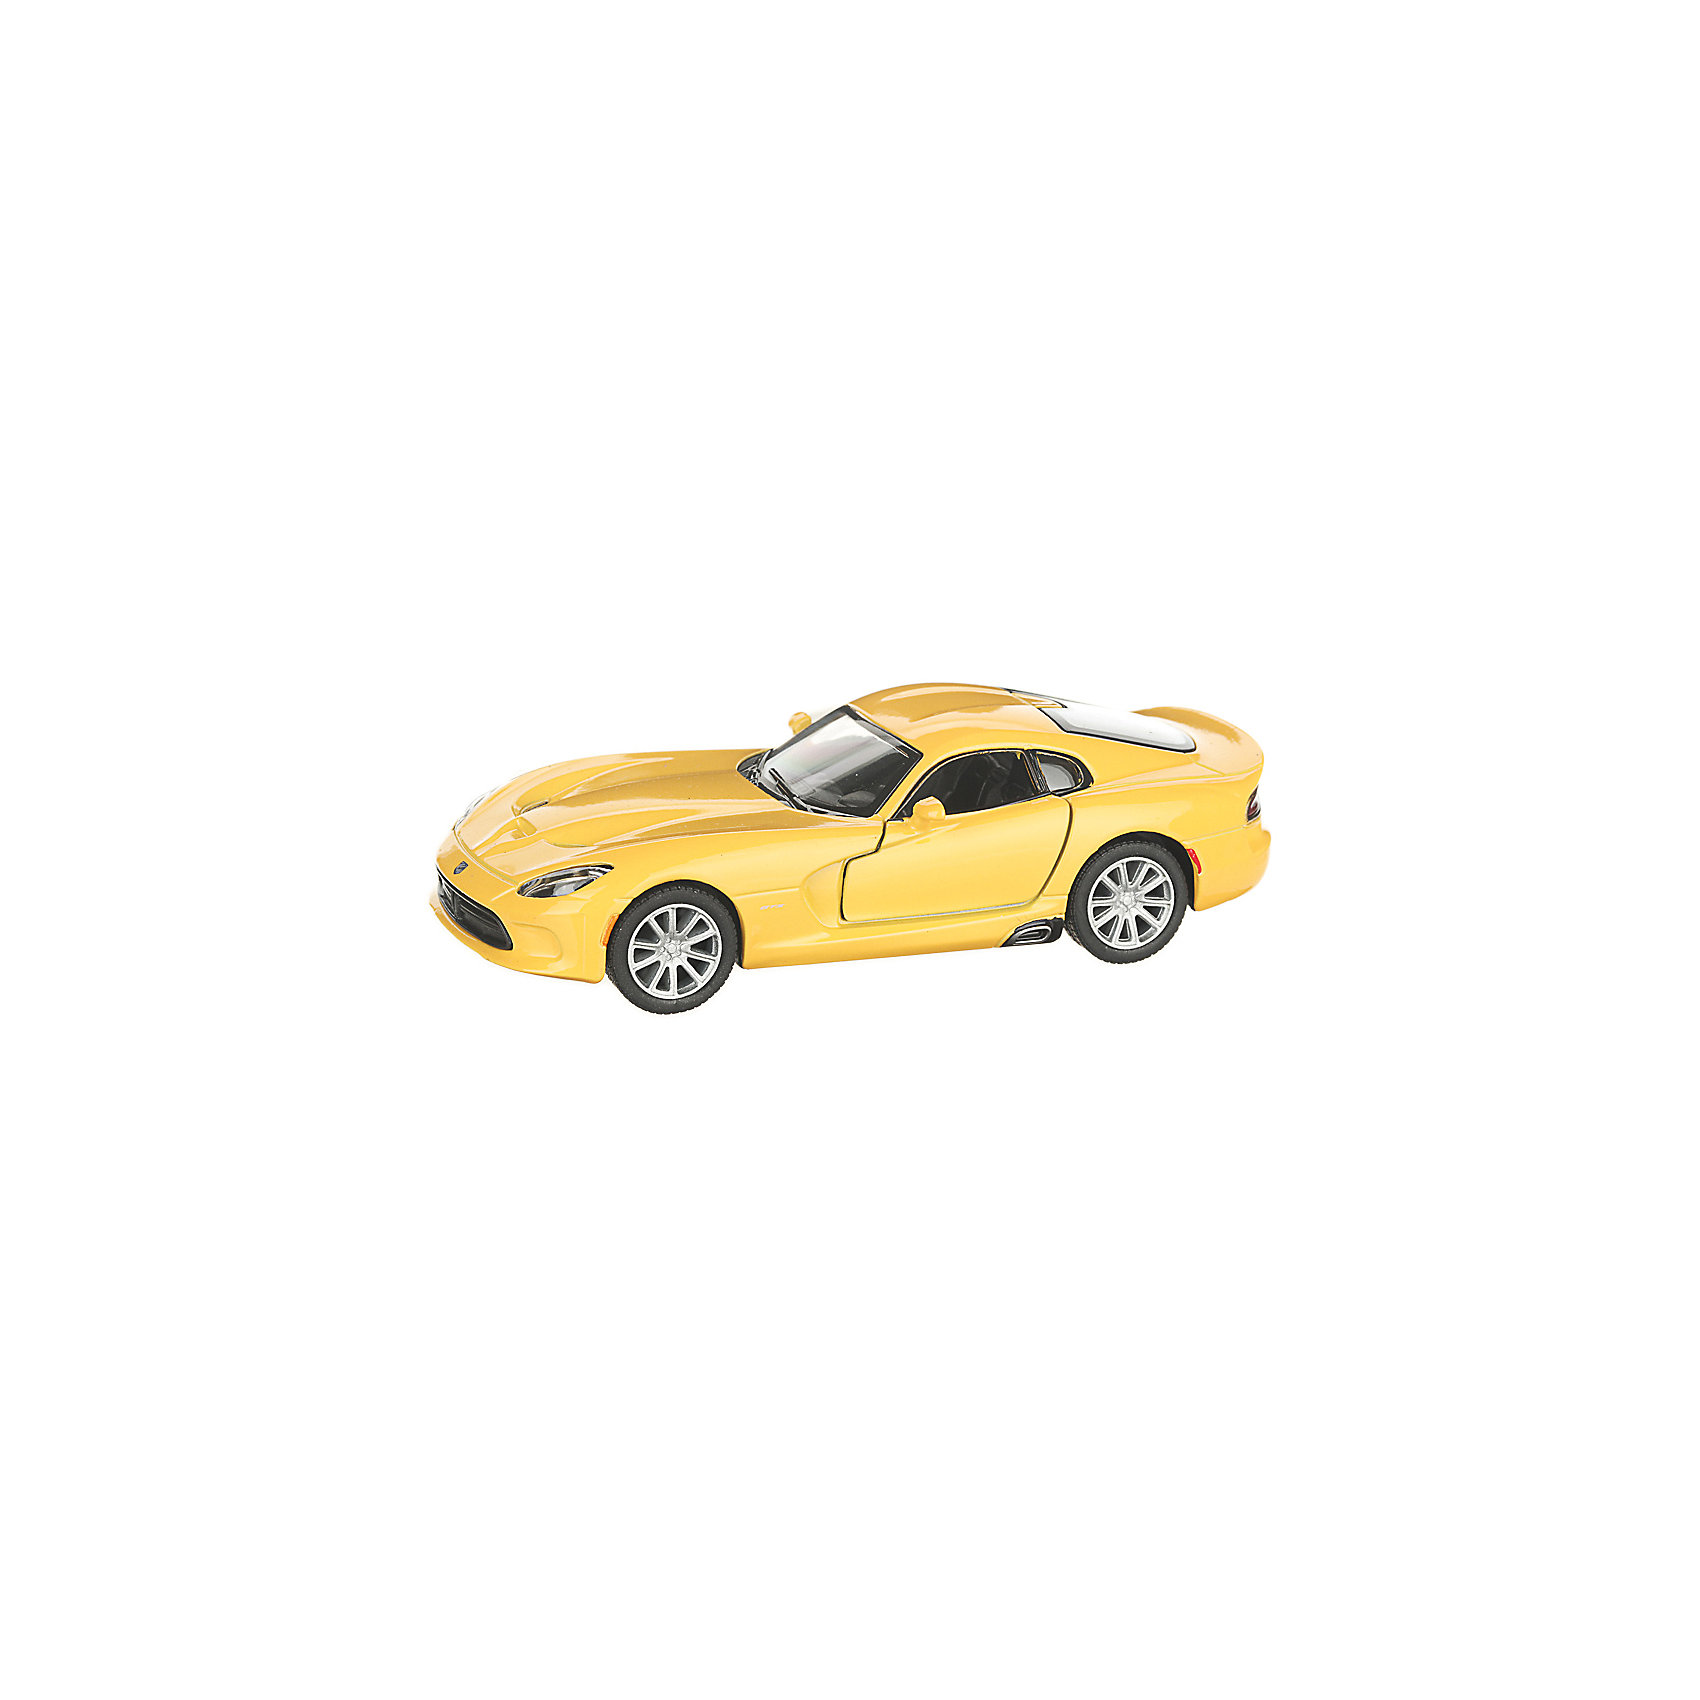 Коллекционная машинка 2013 Dodge SRT Viper GTS, жёлтая Serinity Toys 13233044